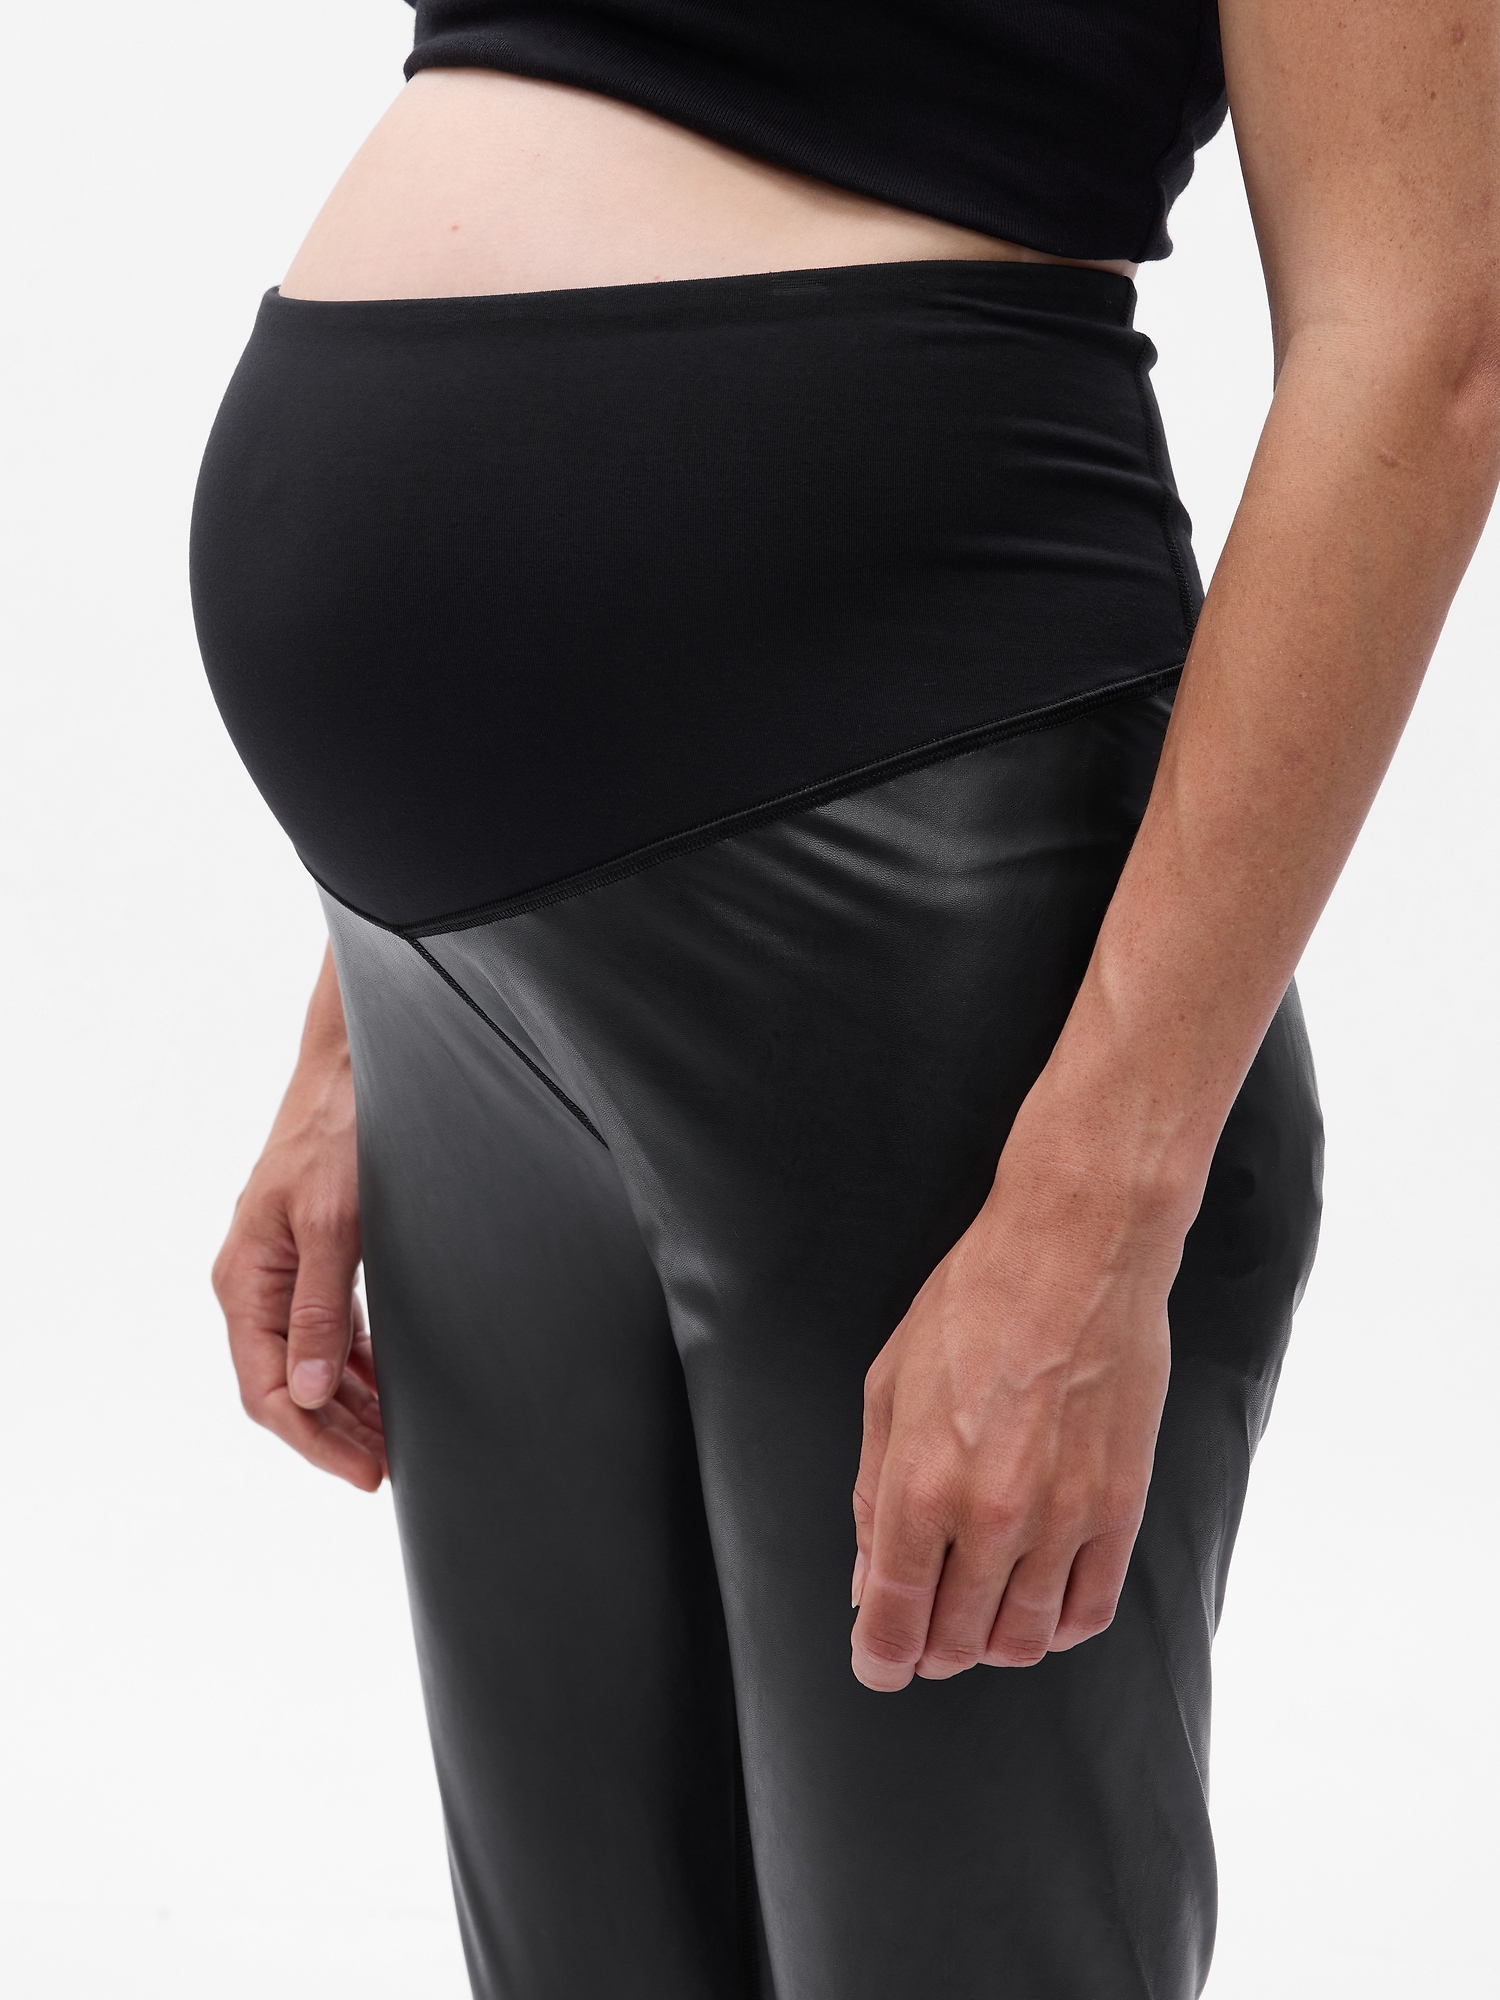 Gap Black Size Large Ladies Exercise Pants